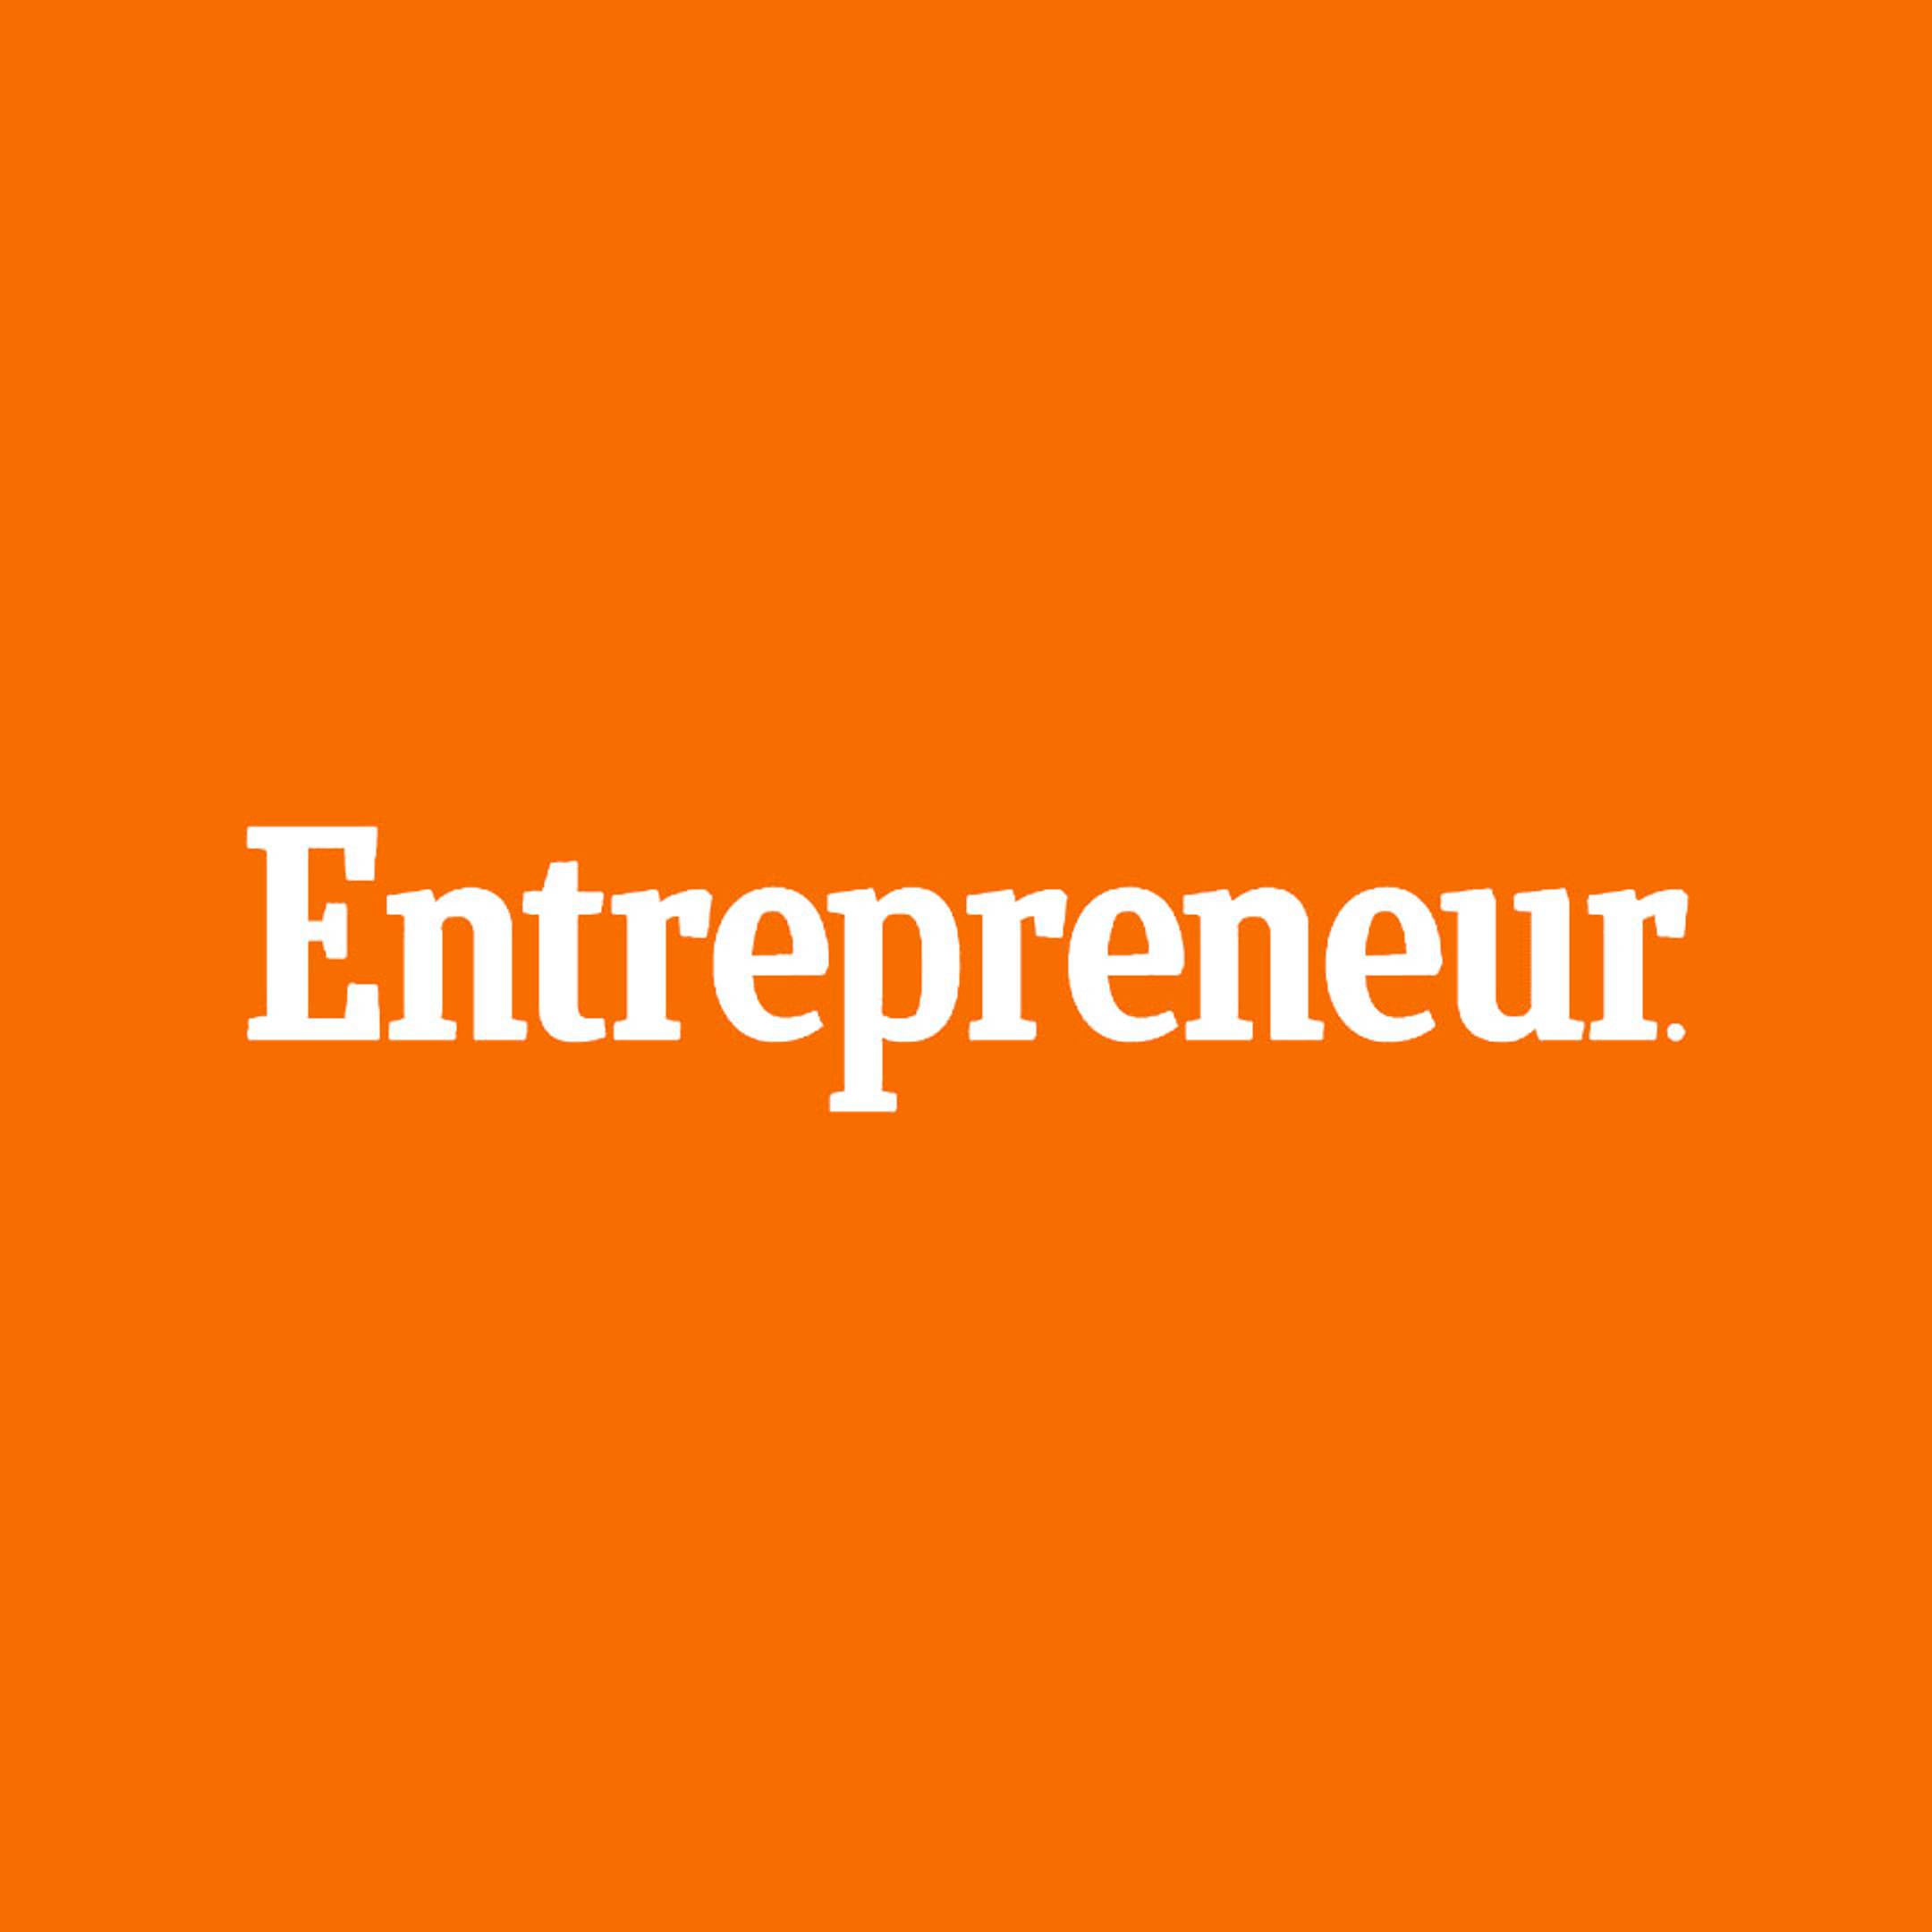 Entrepreneur logo on orange background 